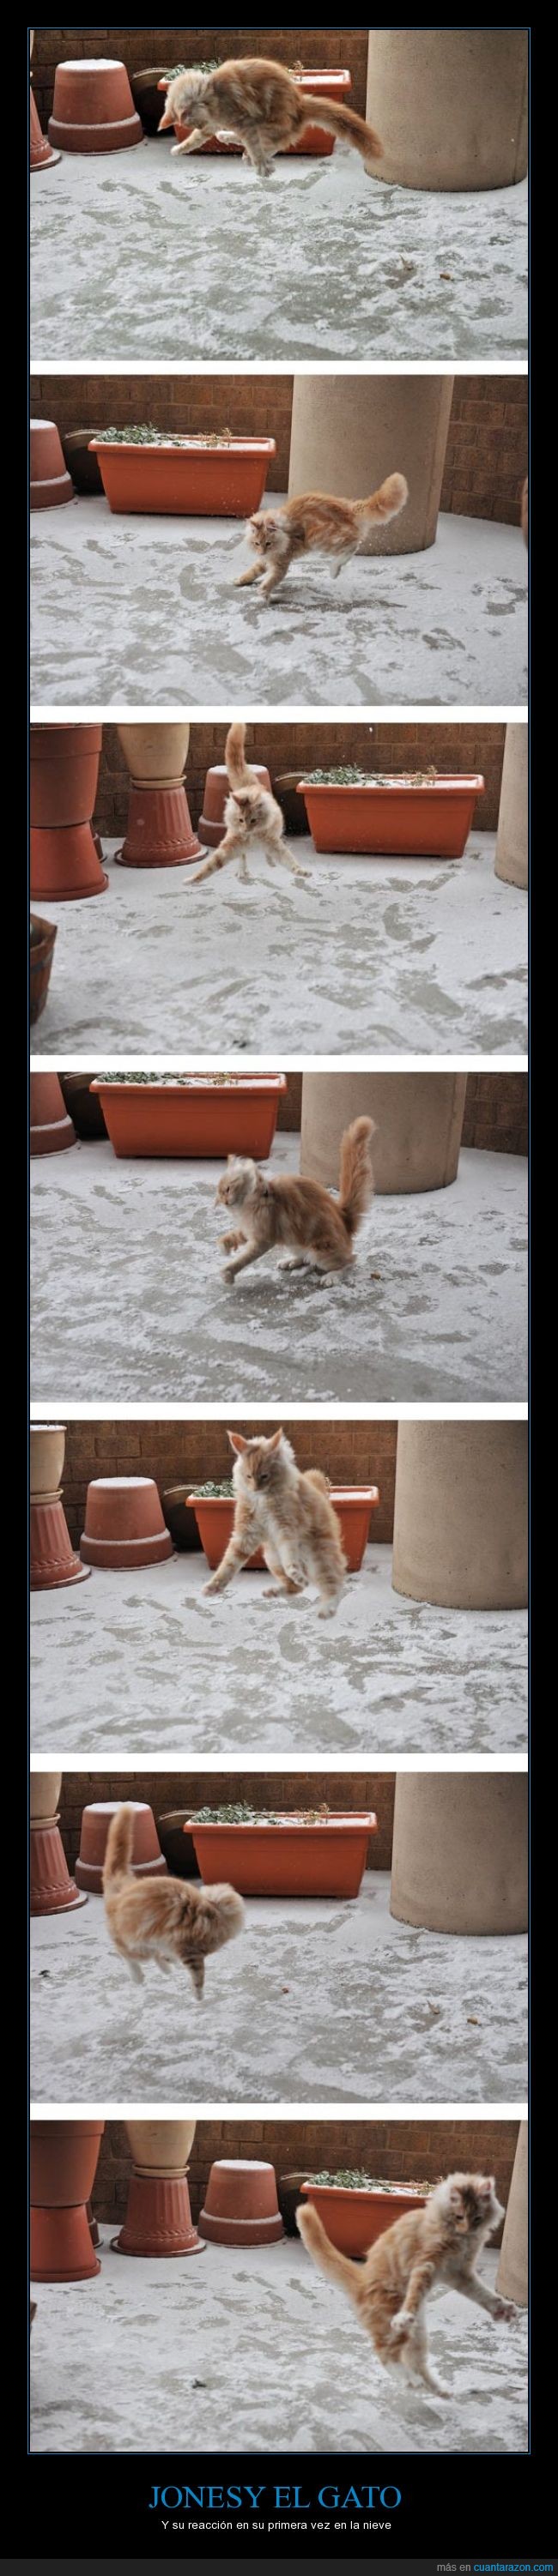 gato,nieve,saltar,genial,jonesy,frio